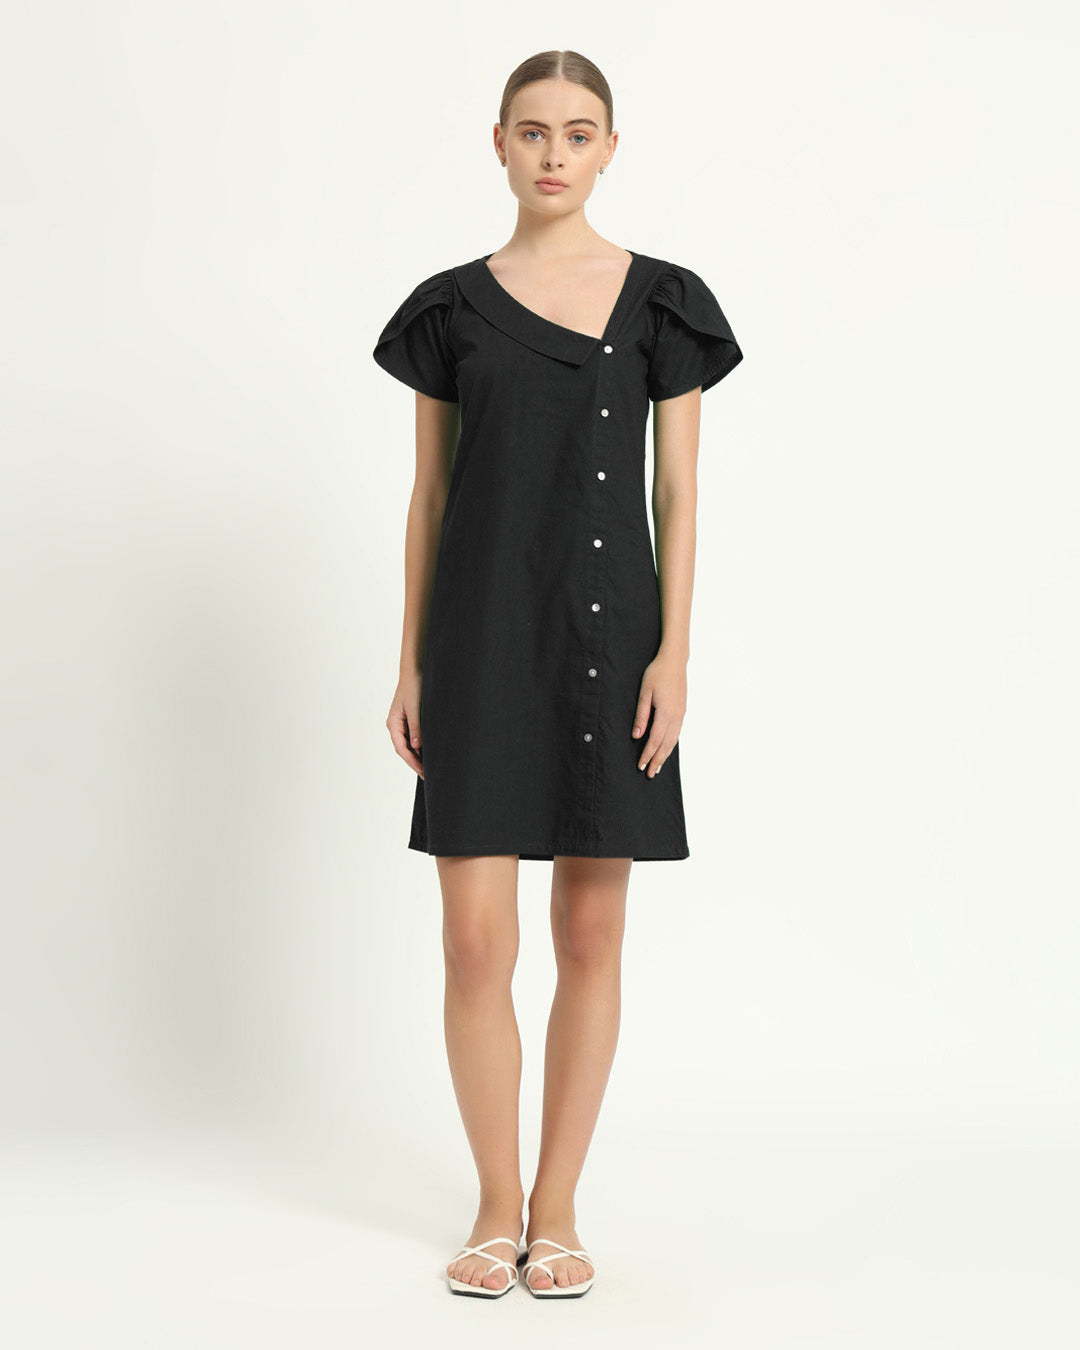 The Krensdorf Noir Cotton Dress